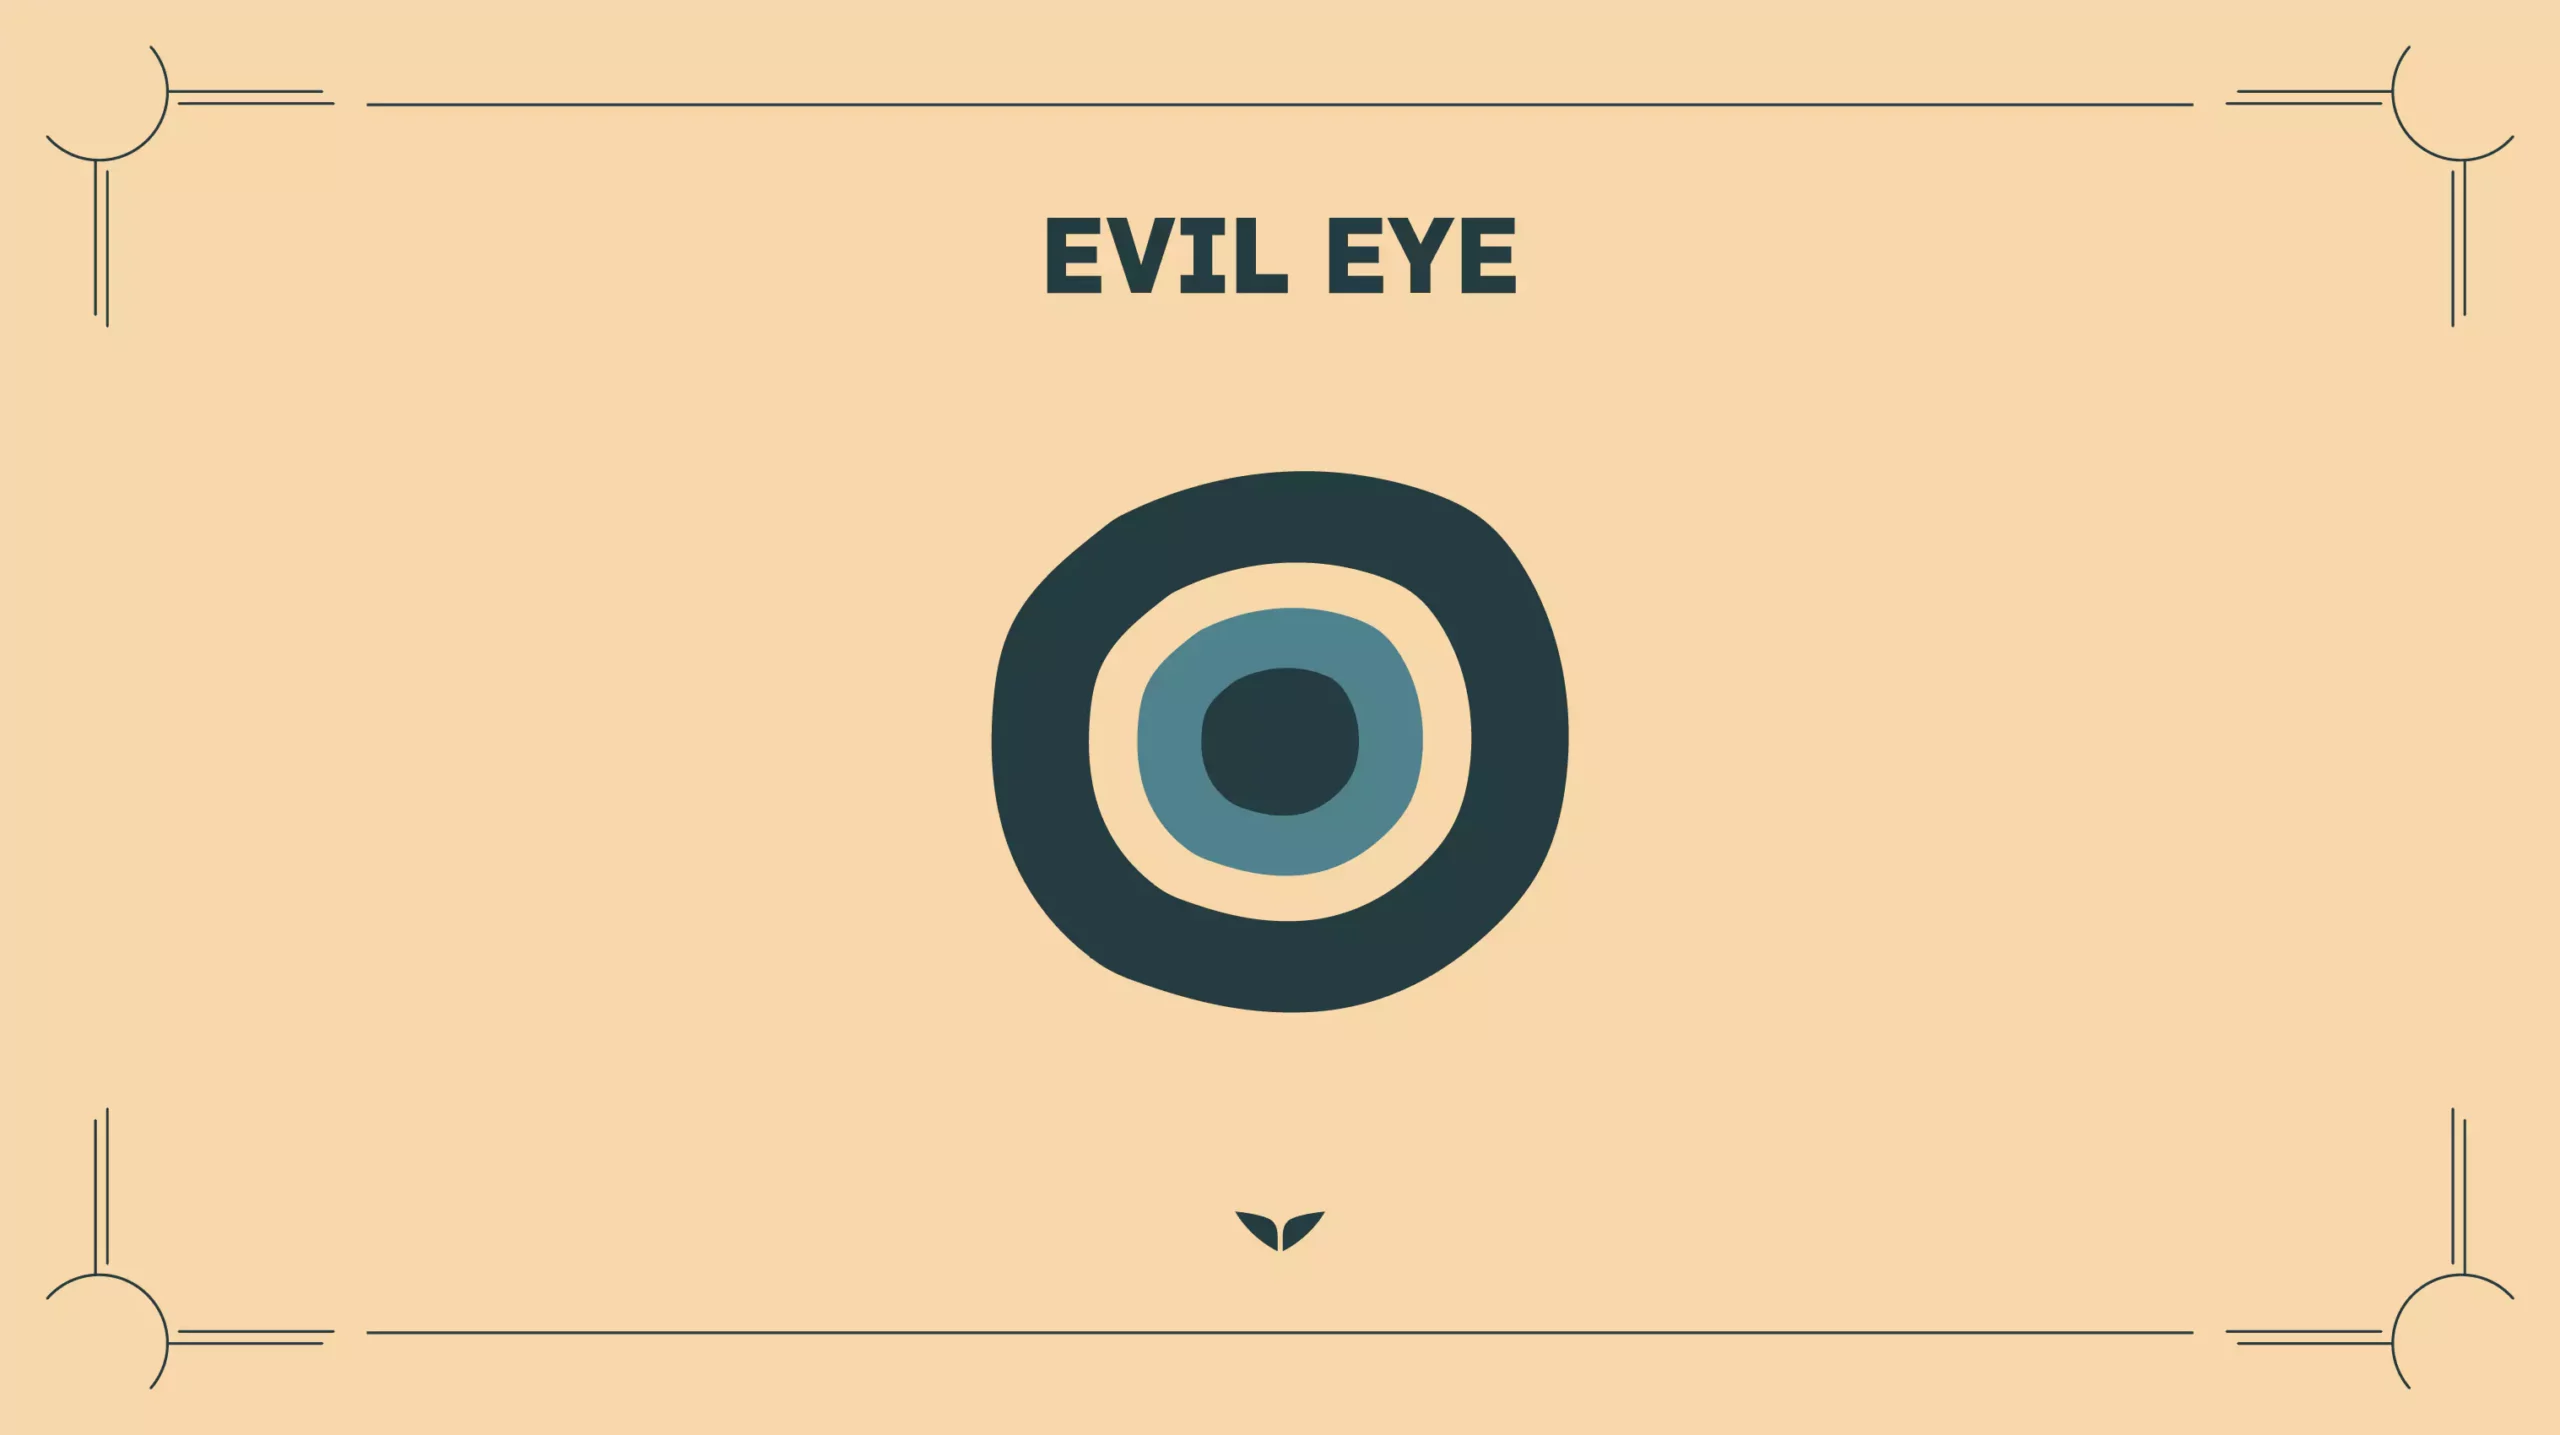 Custom graphic of the spiritual symbol, Evil Eye